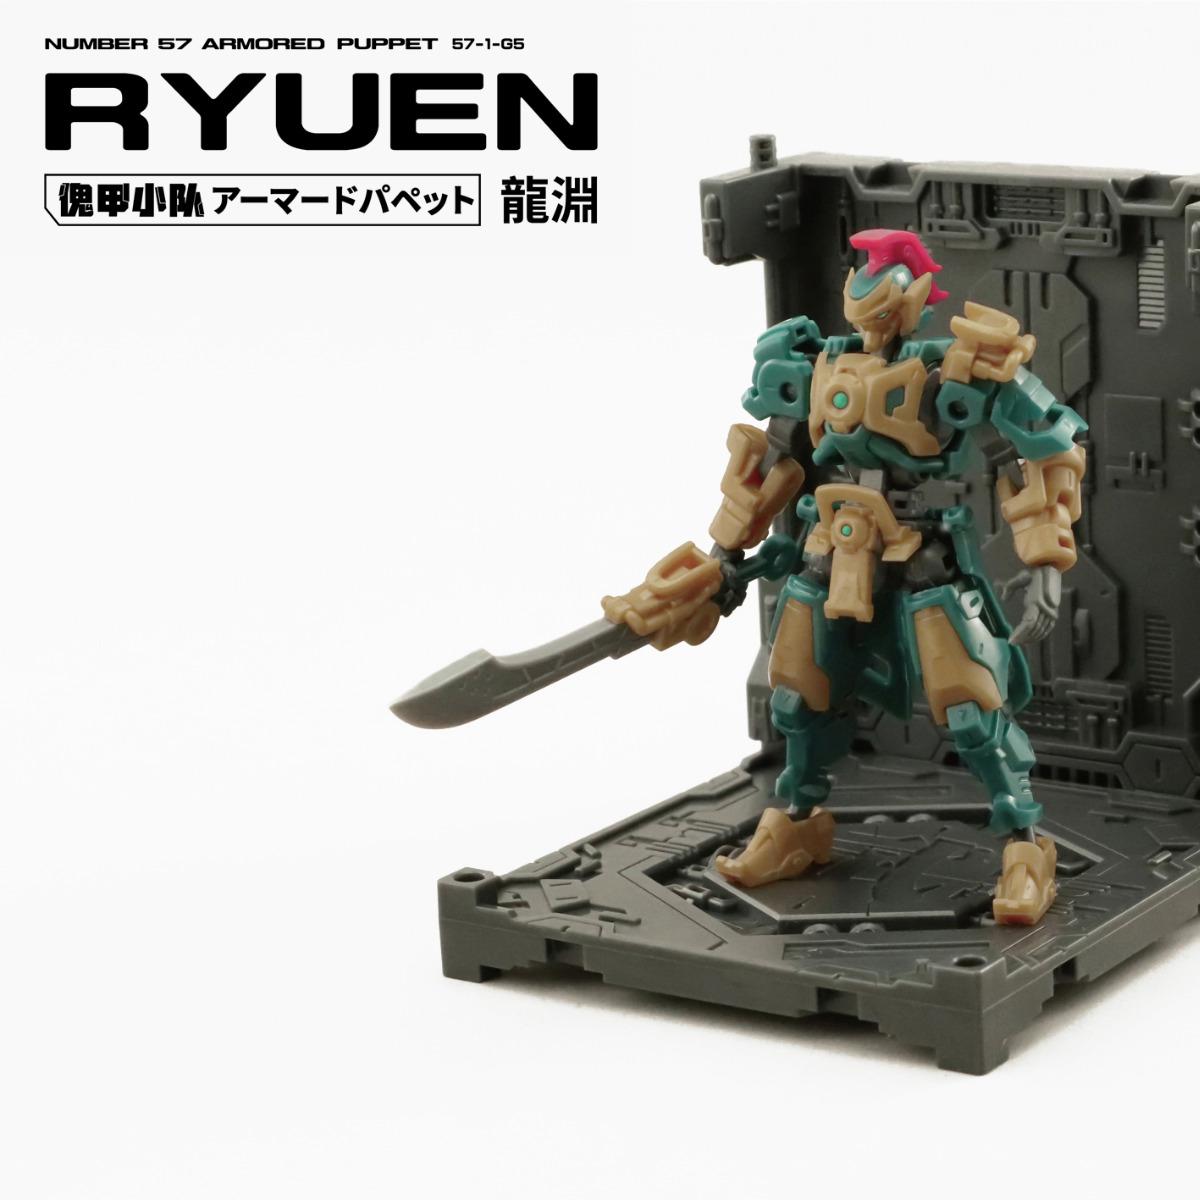 1/24 Armored Puppet Ryuen